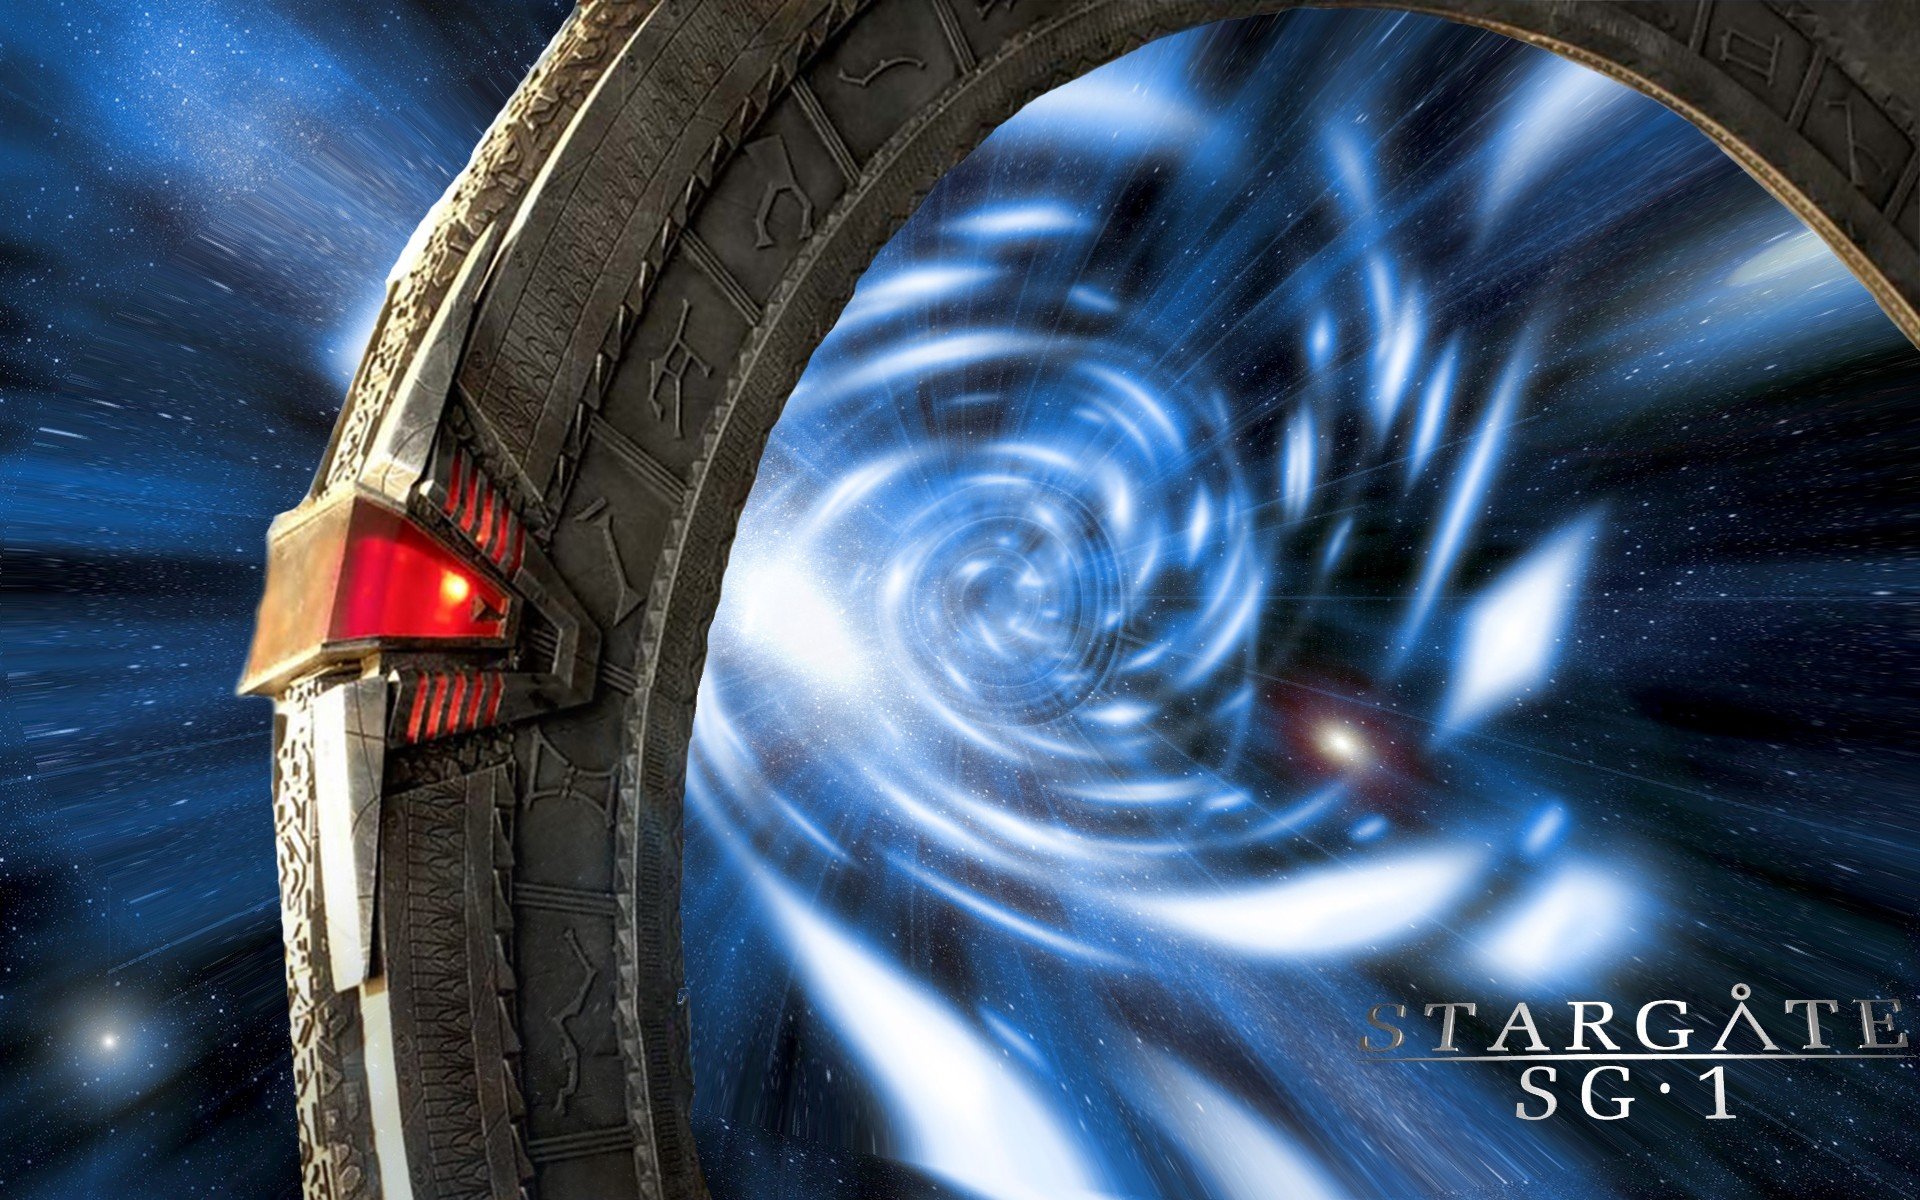 Stargate HD Backgrounds for 1920x1200 desktop.